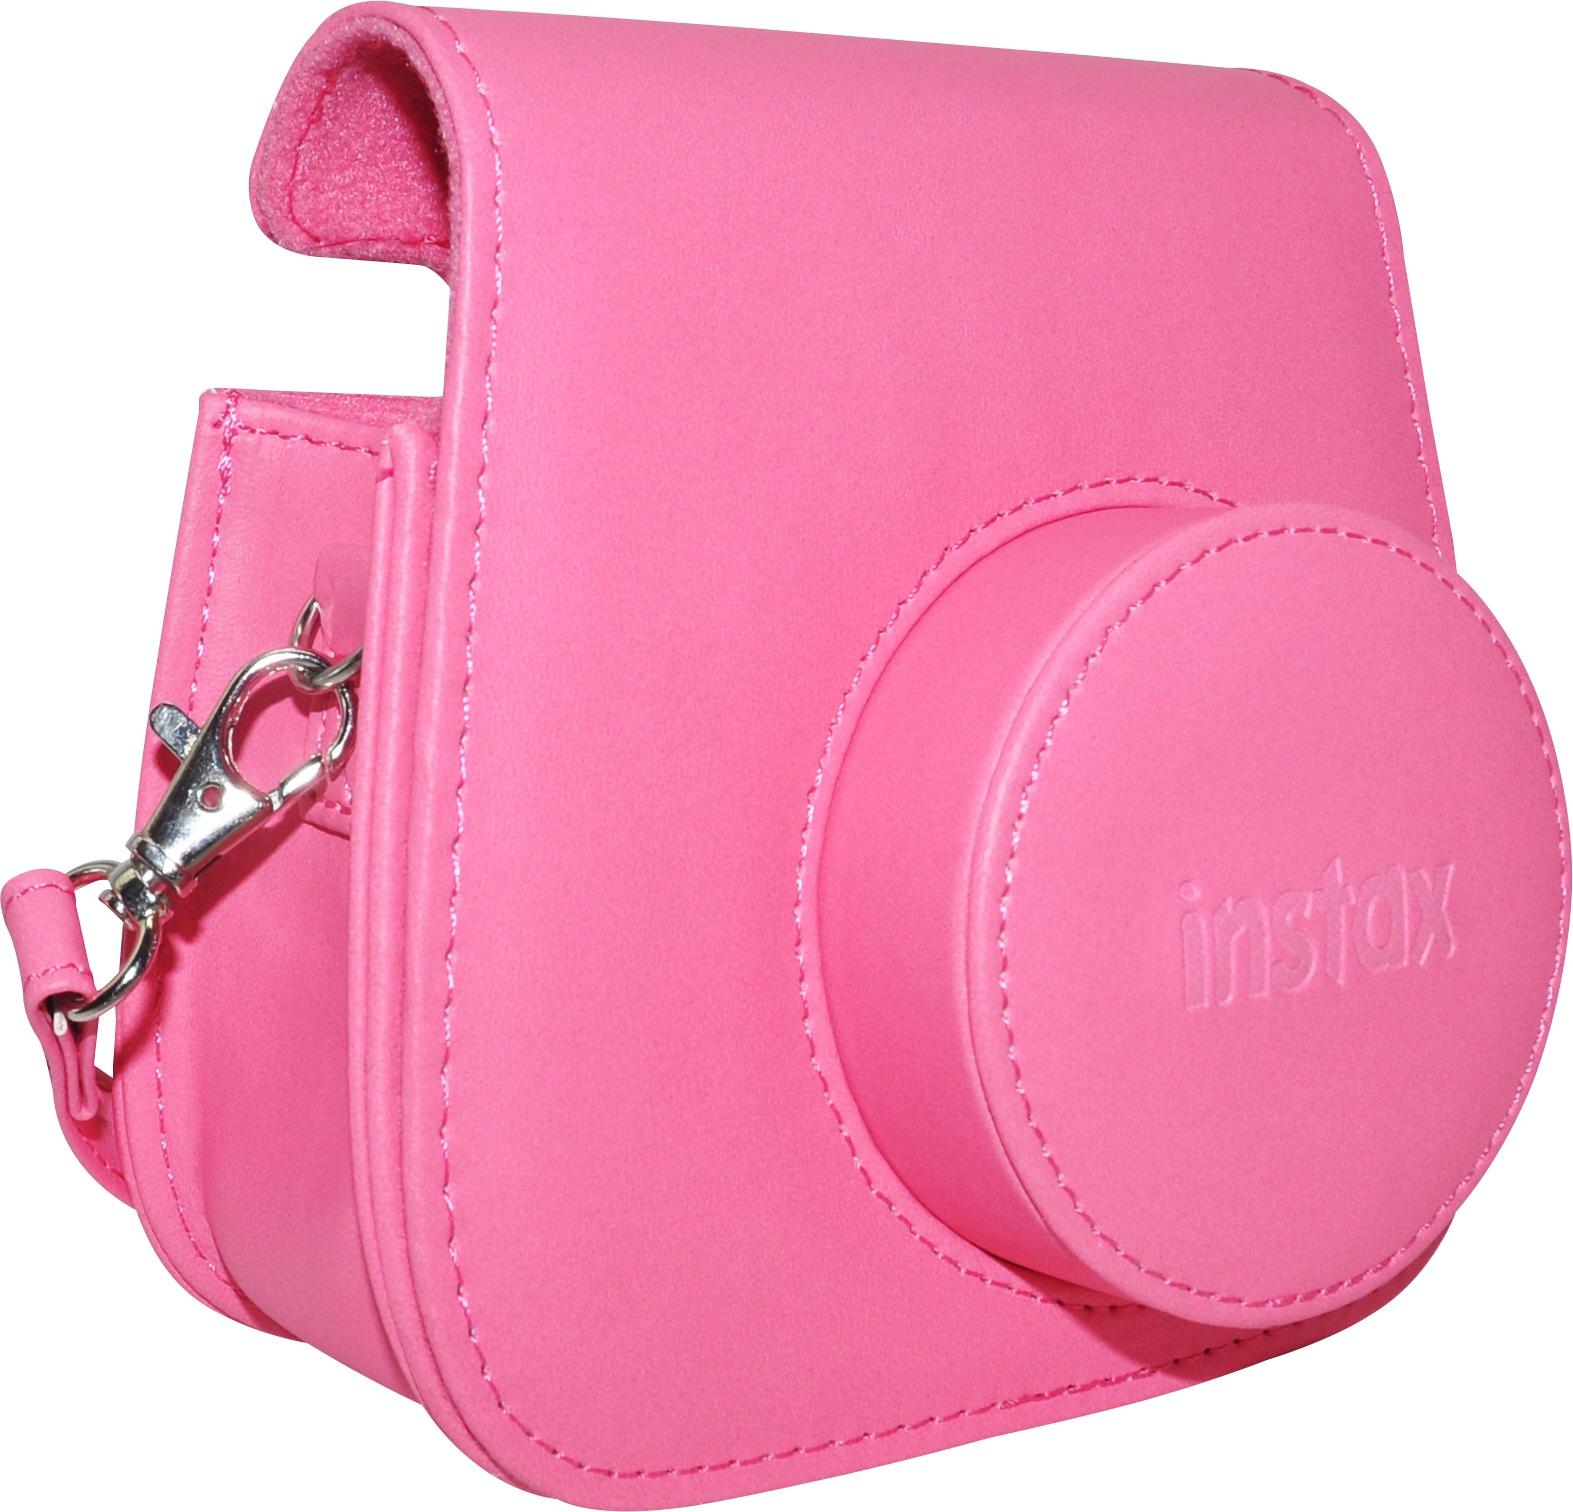 pink camera case